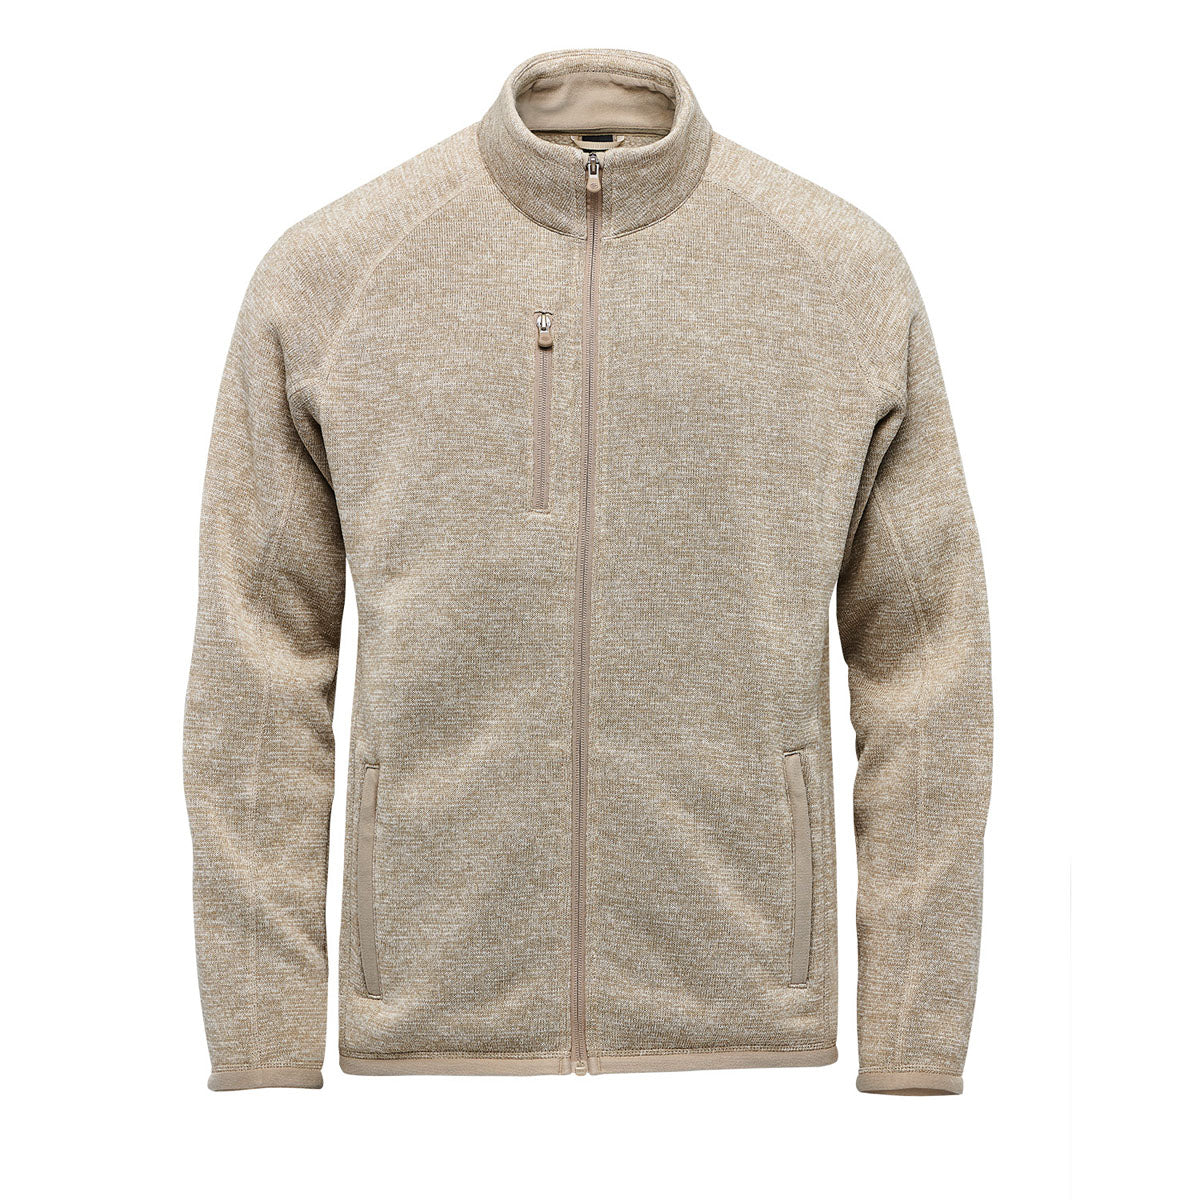 Men's Hi-Tec 1/4 Zip Long Sleeve Thermo Textured Fleece Jacket w/Pockets